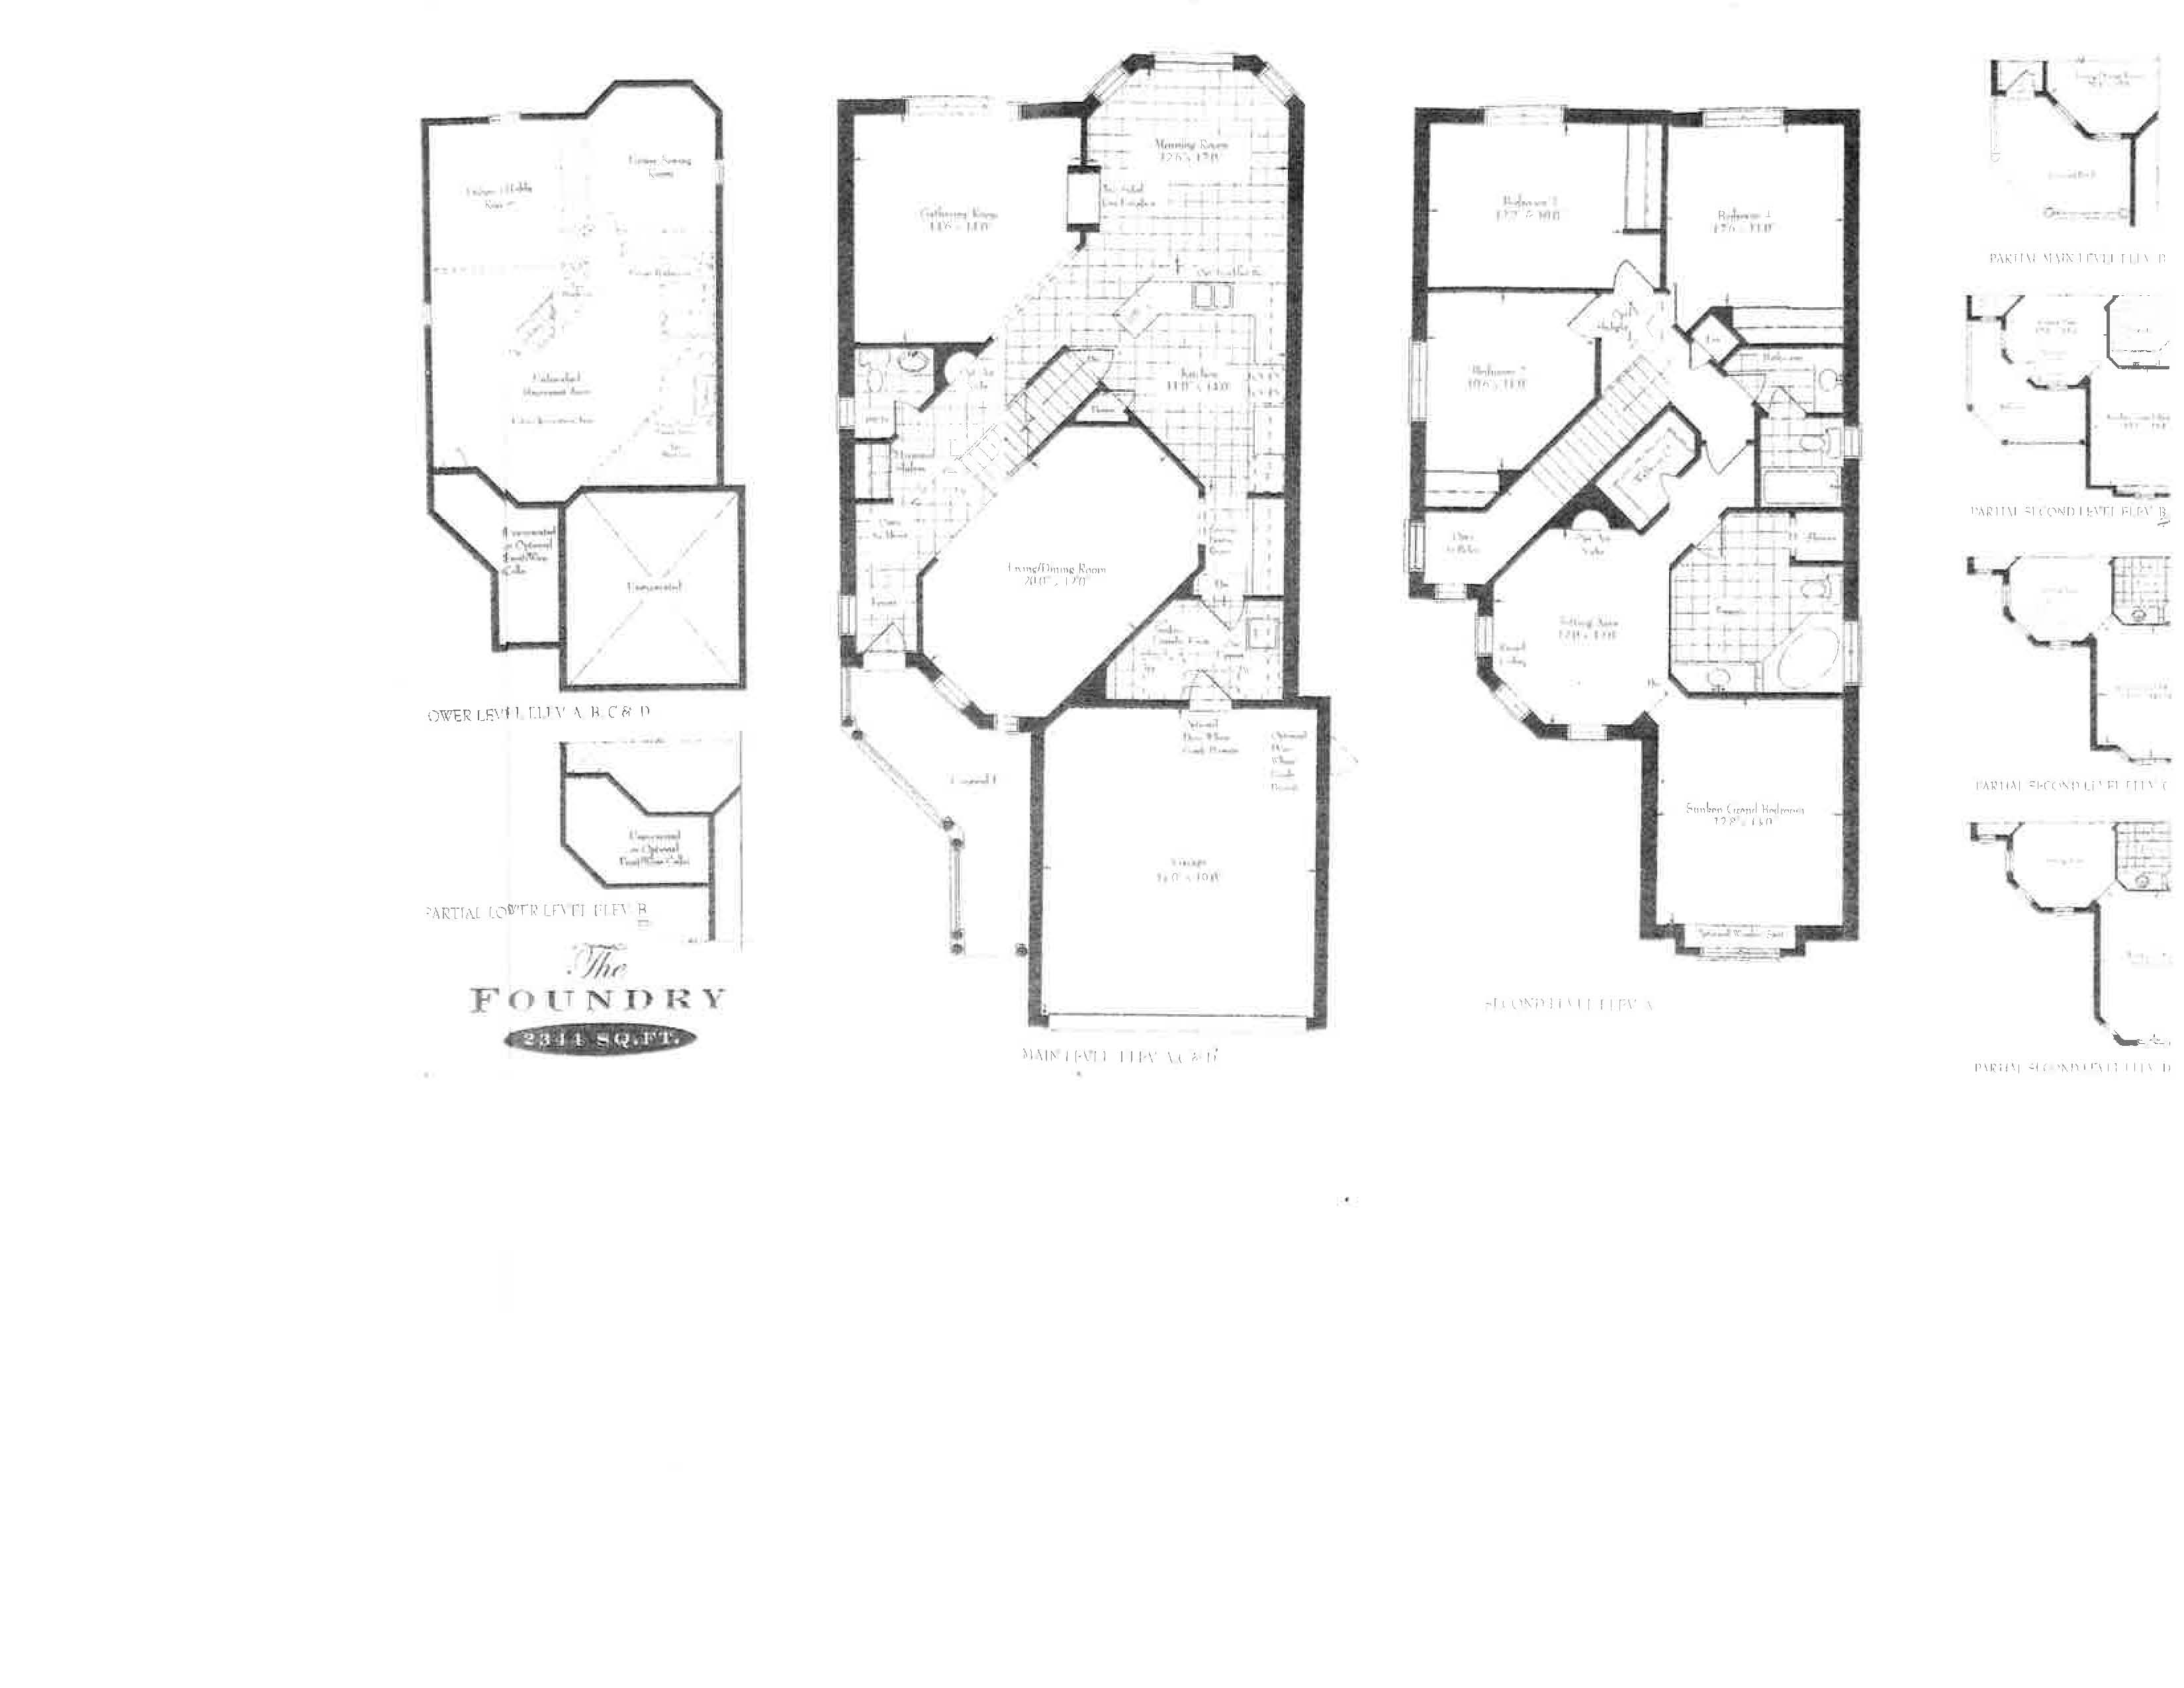 Floor plans - click for larger pdf version